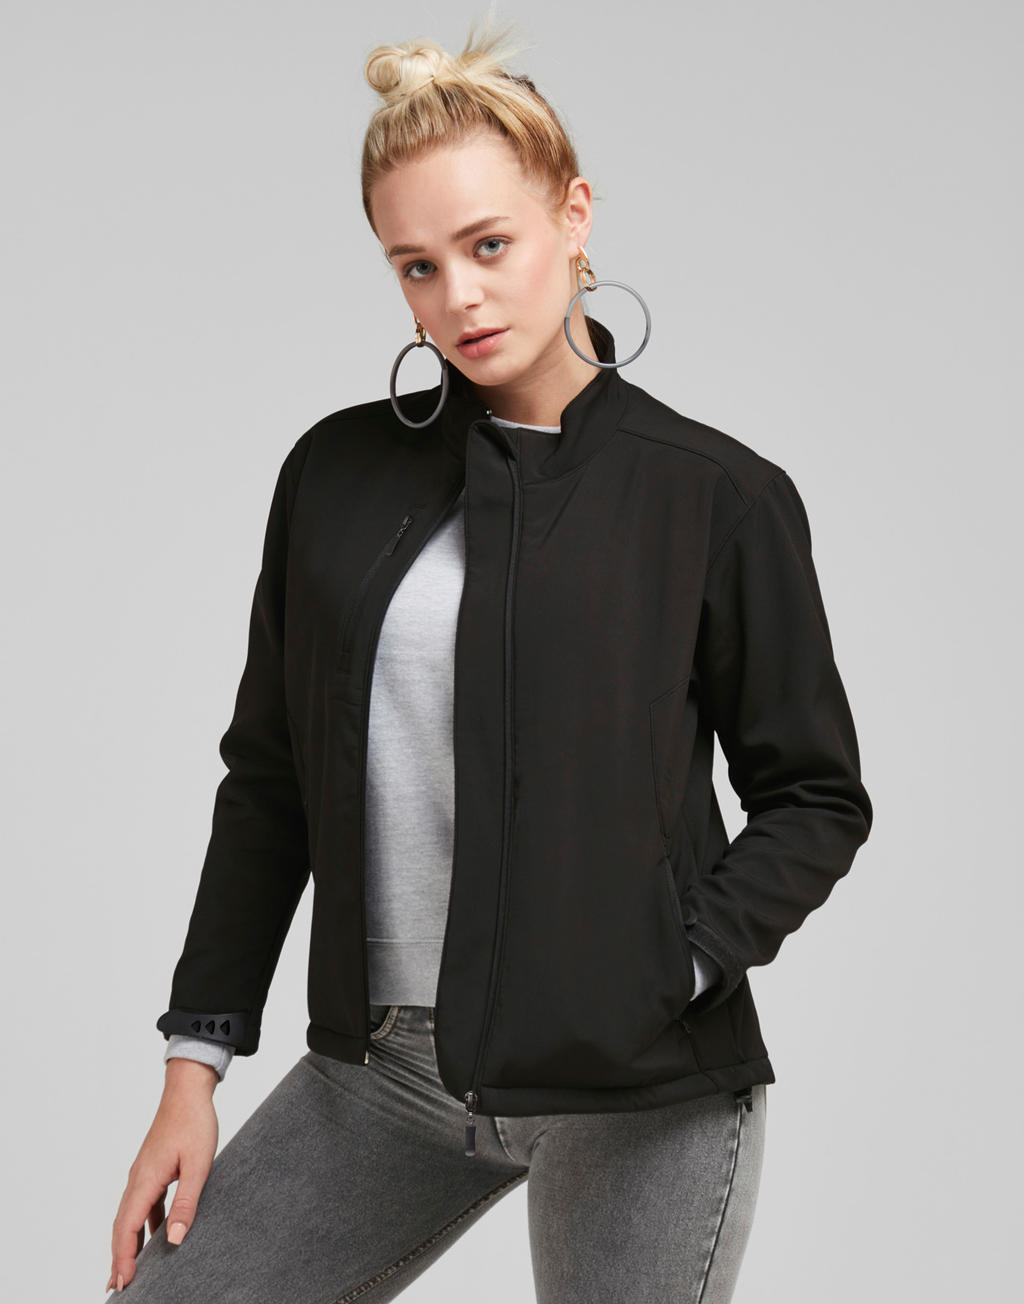  Ladies Softshell Jacket in Farbe Black